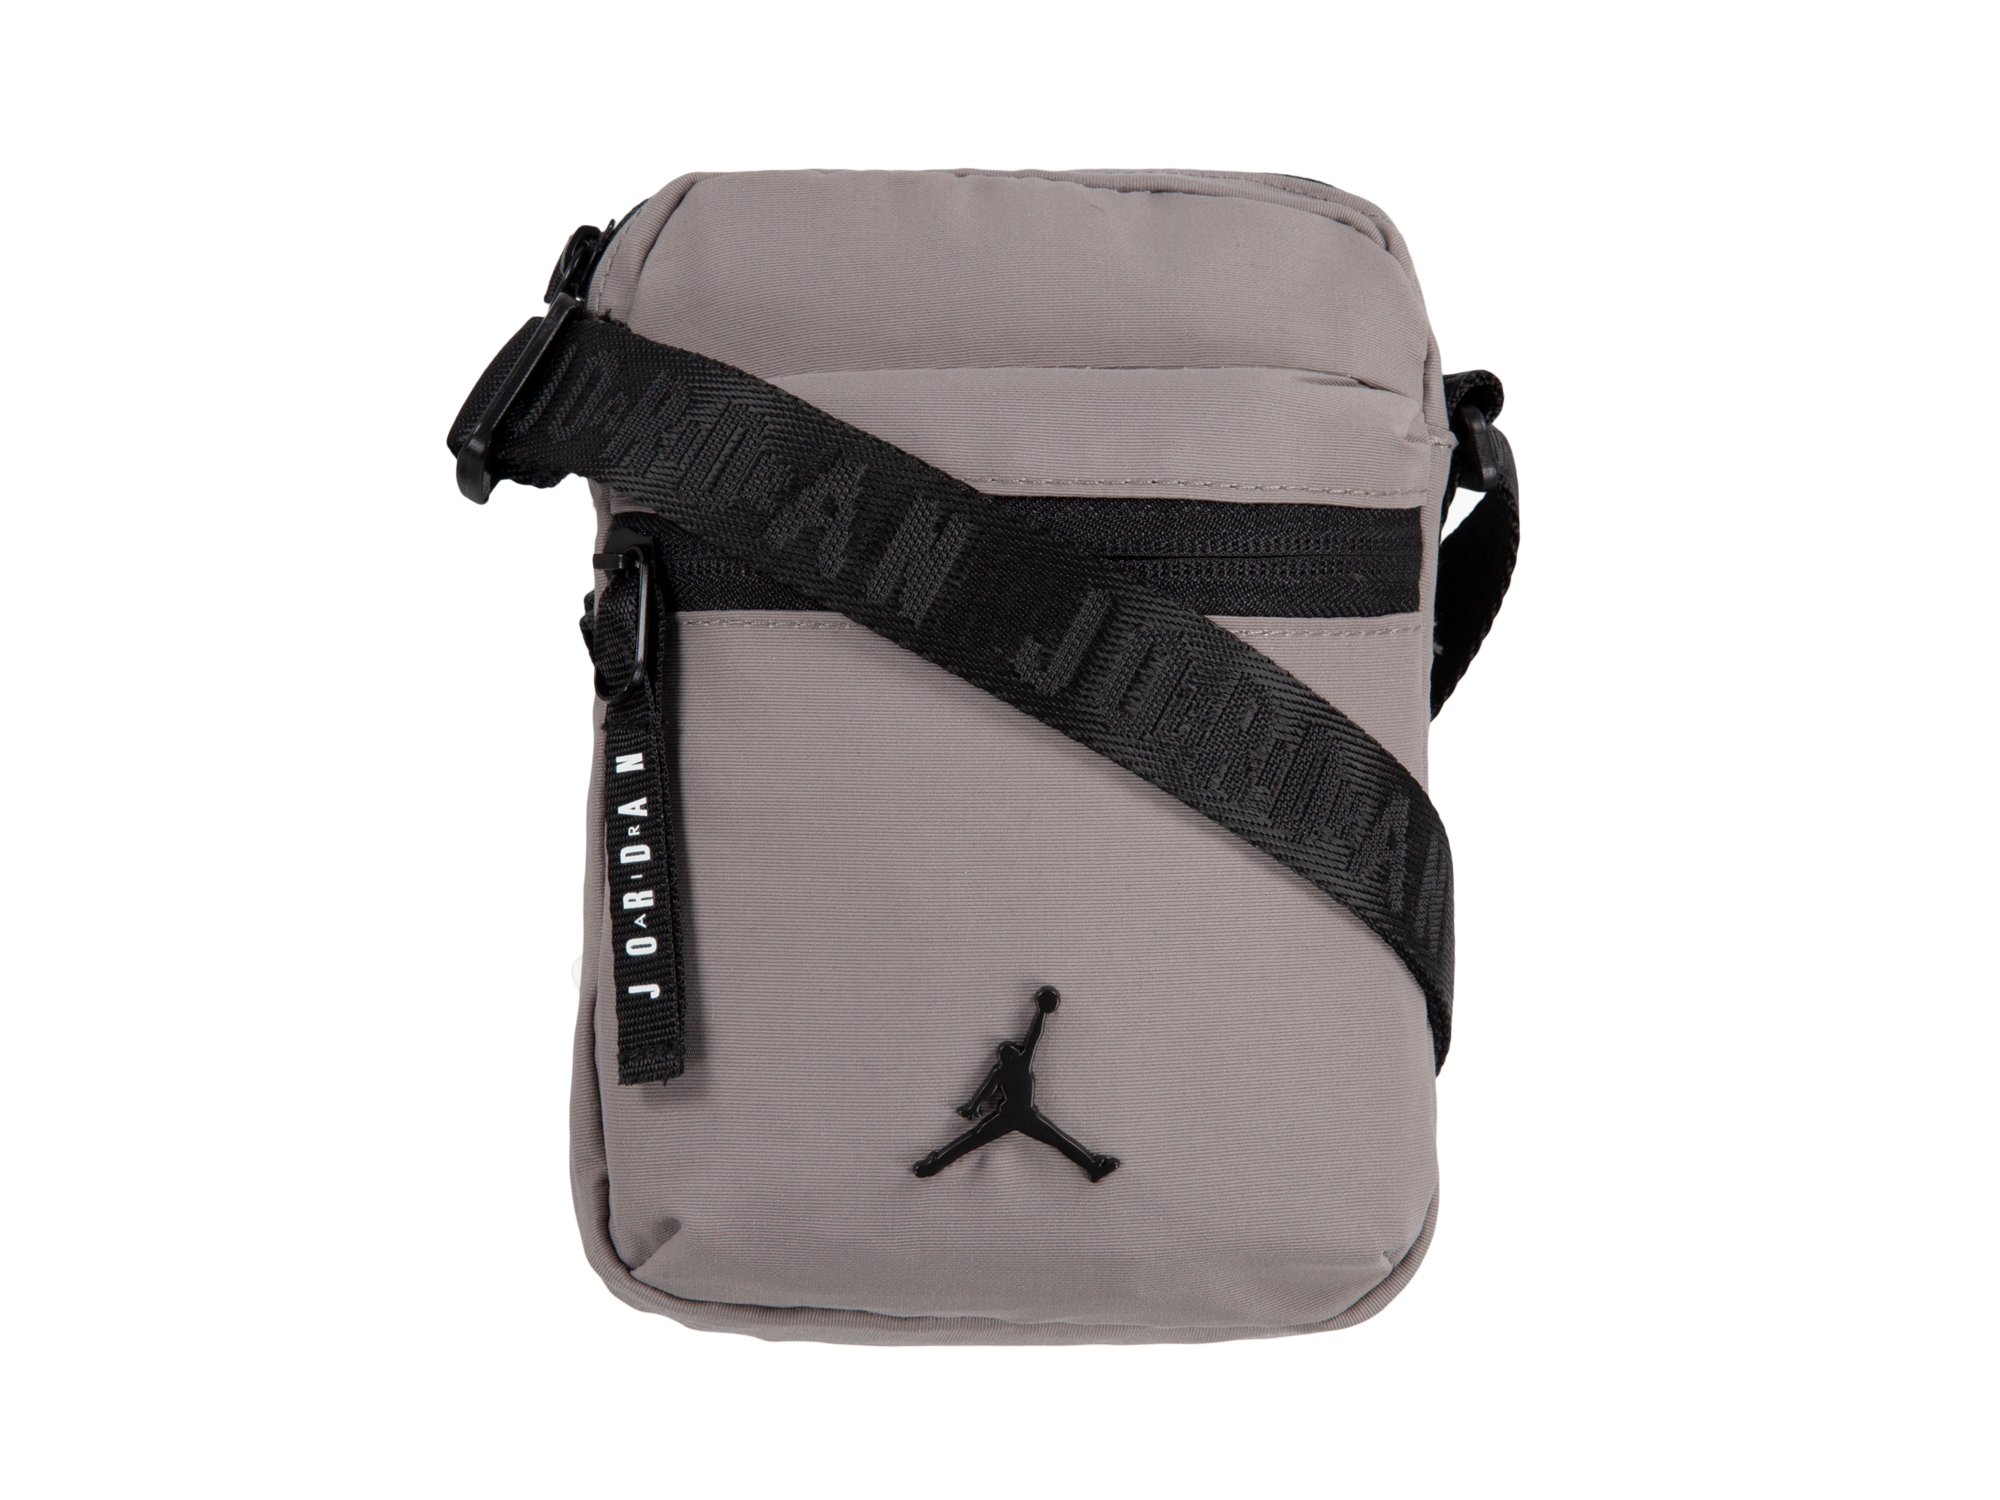 Jordan Airborne Festival Bag